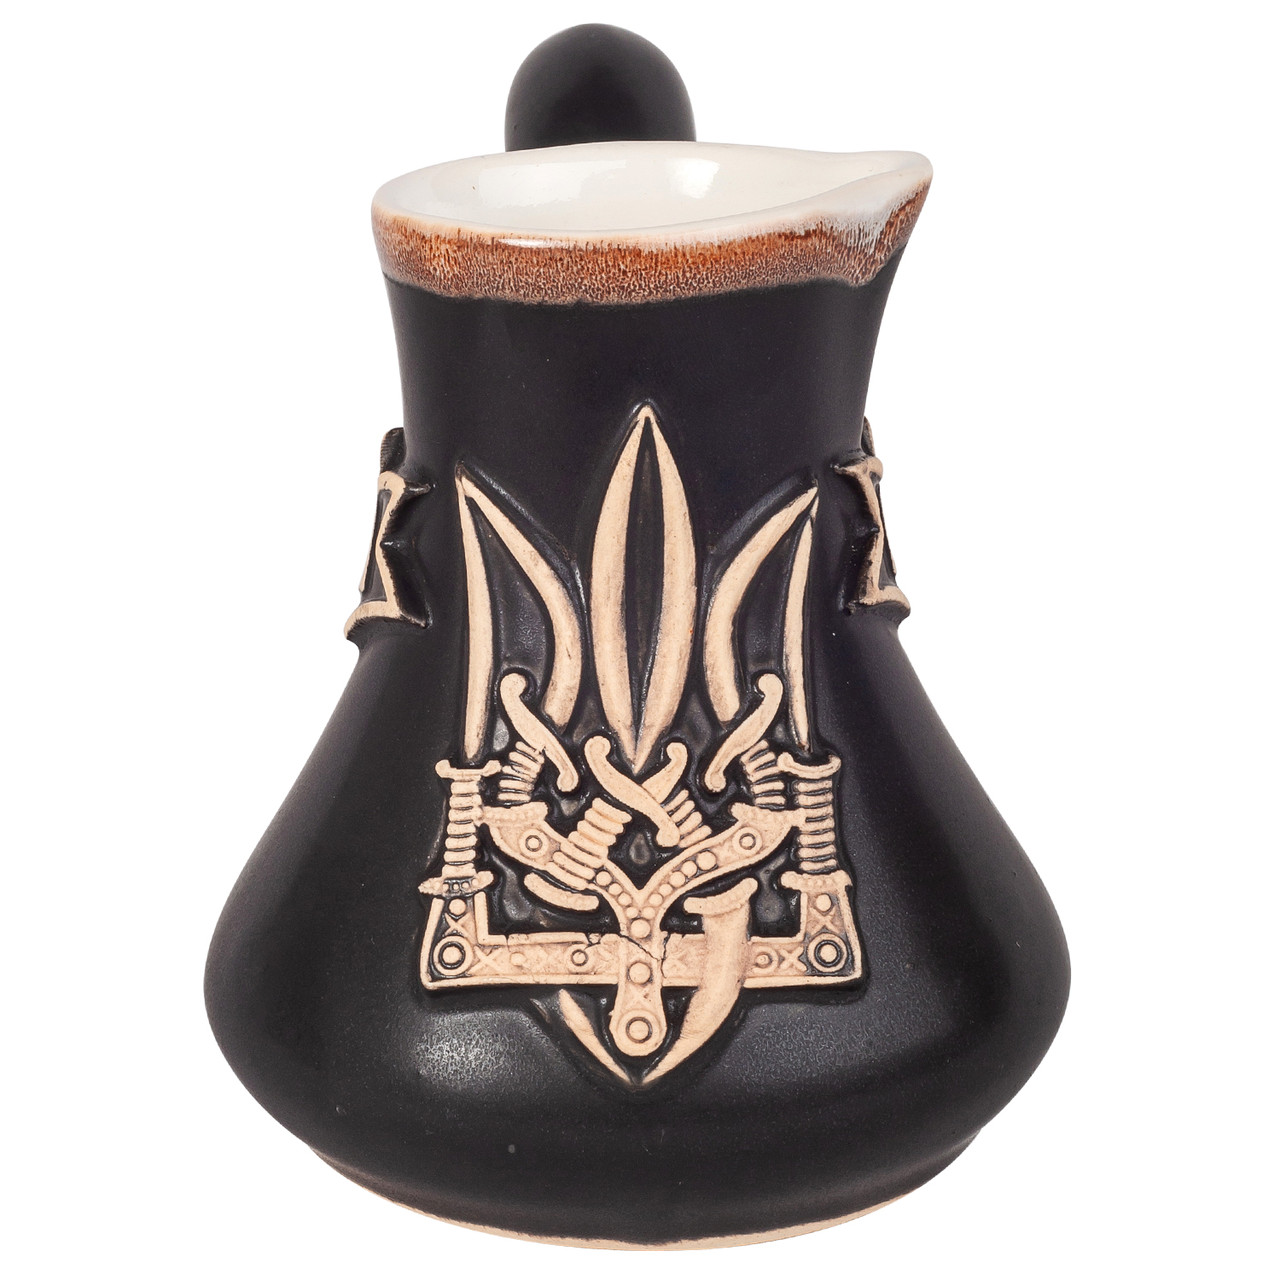 Турка кавова керамічна глиняна Тризуб герб Україна чорна матова